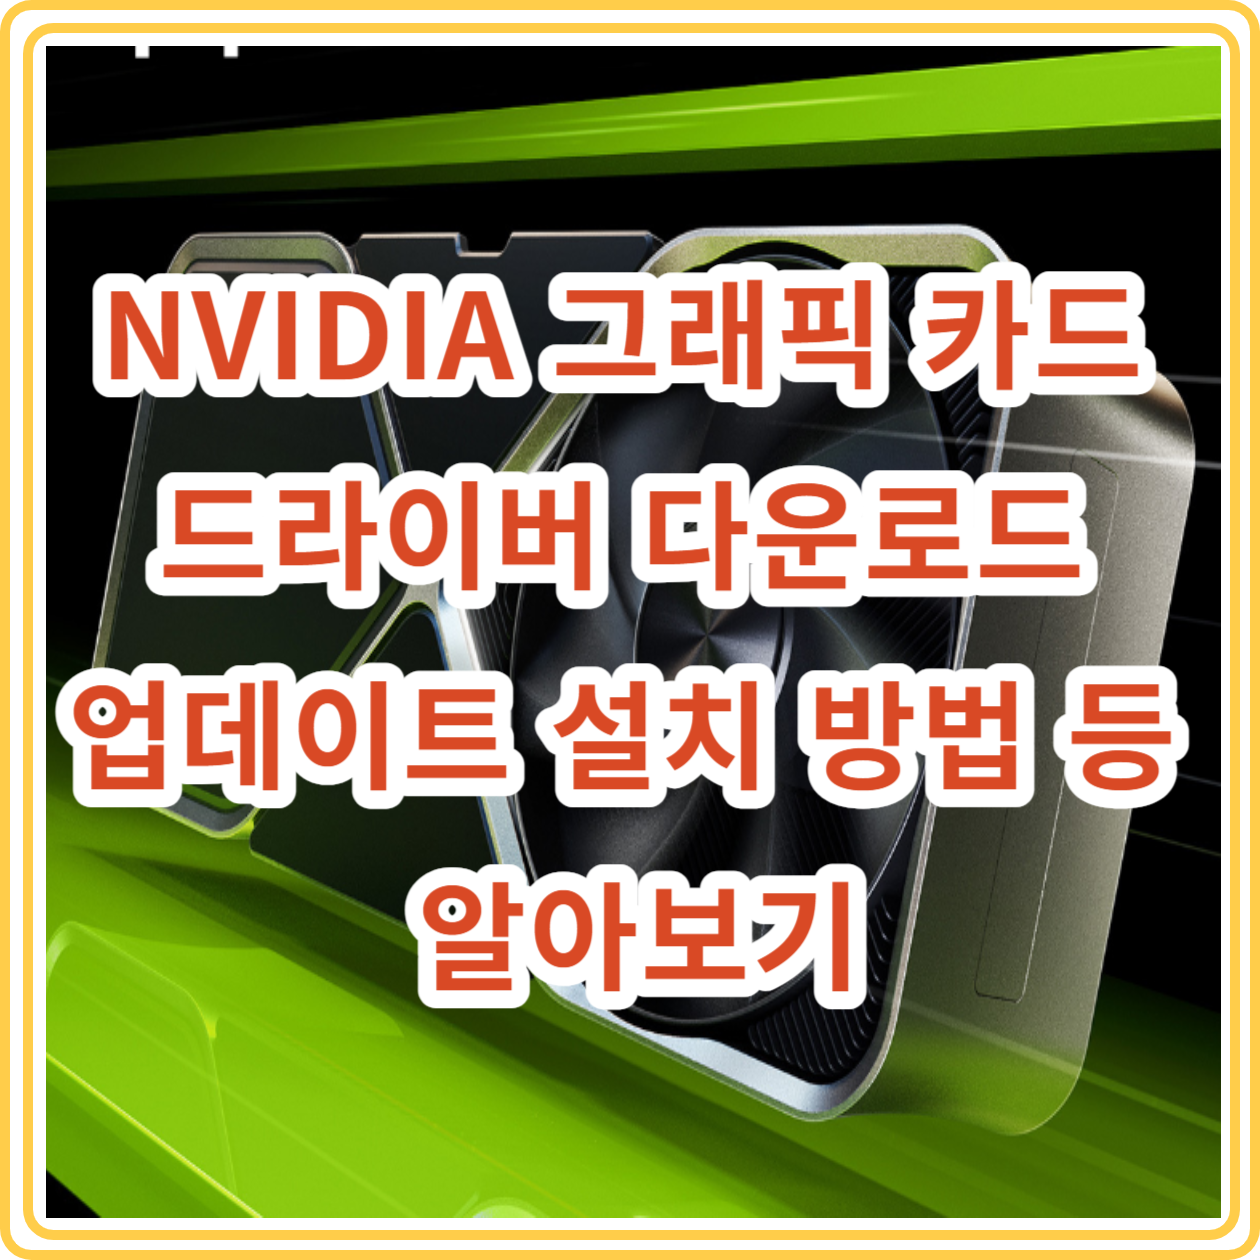 NVIDIA 그래픽 카드 드라이버 다운로드 업데이트 설치 방법 등 알아보기